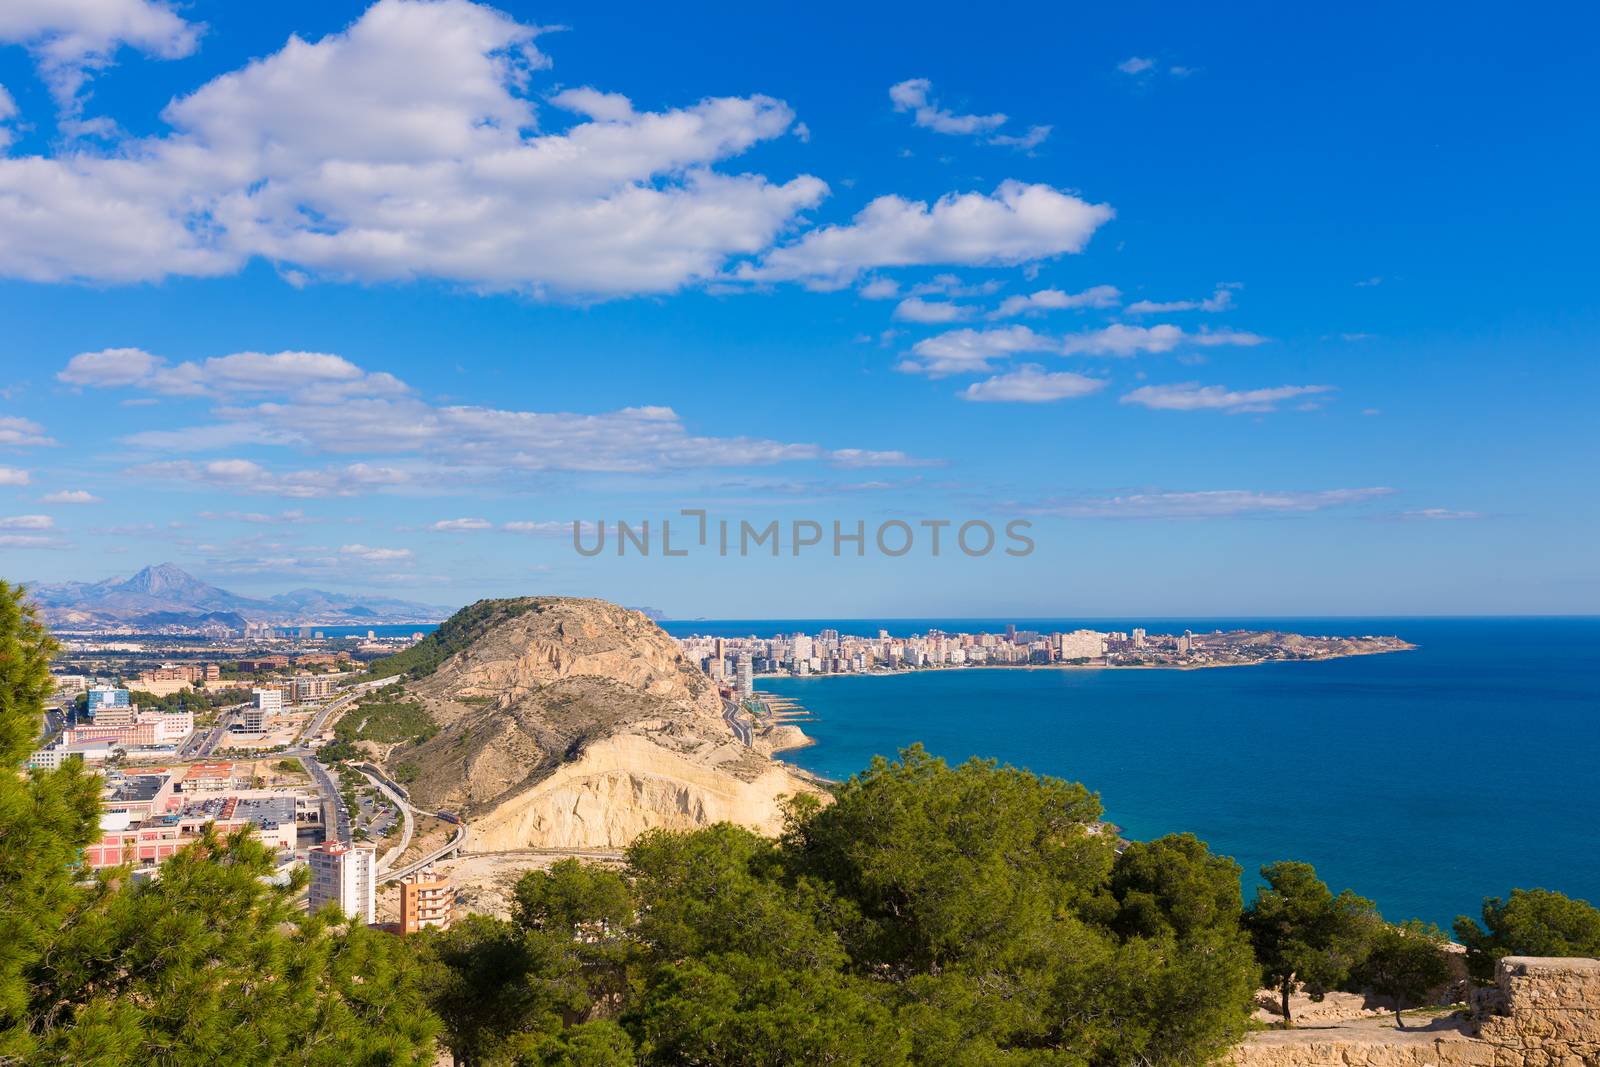 Alicante San Juan beach view from Santa Barbara Castle in Spain